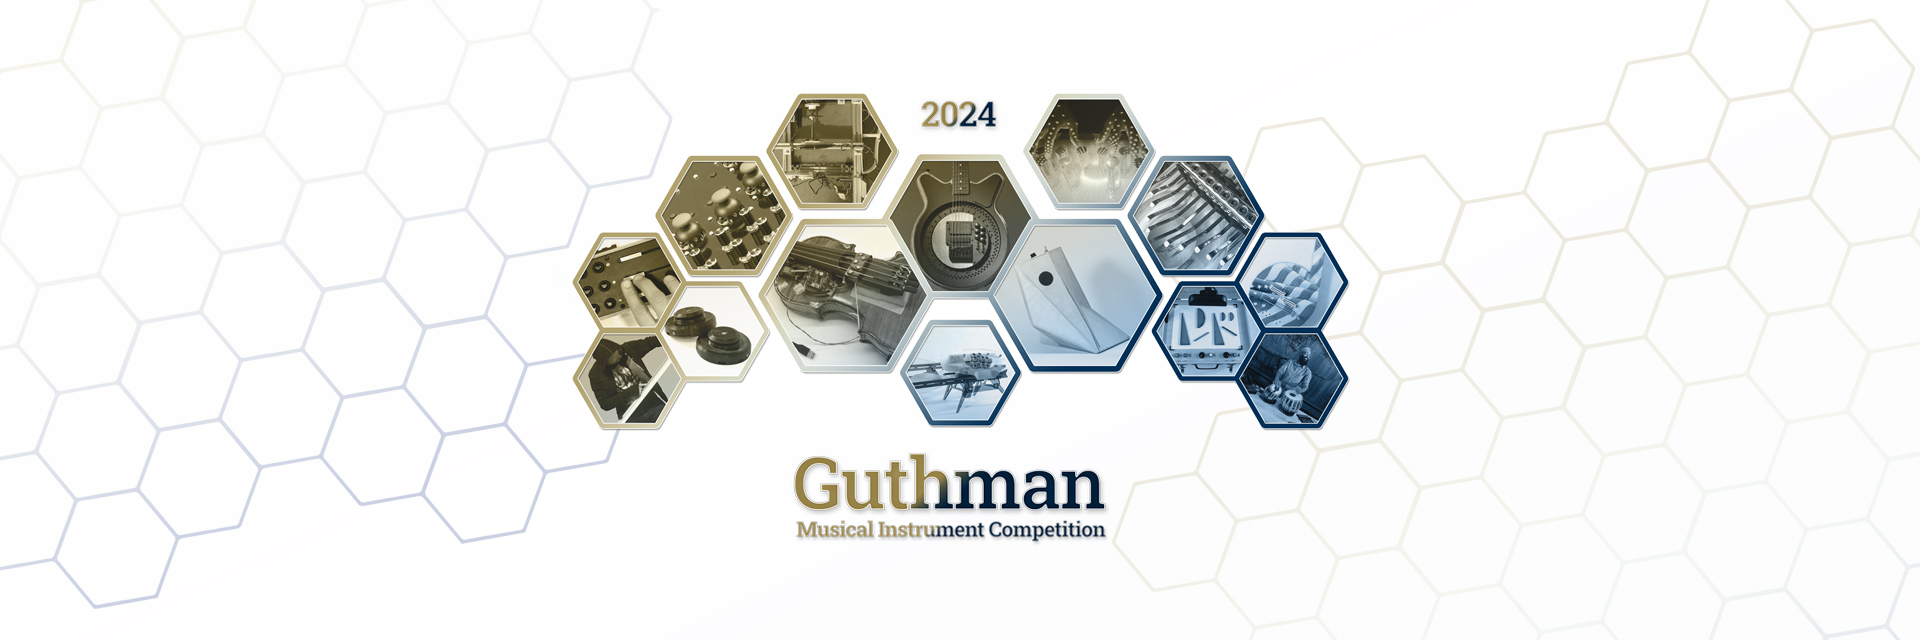 Images of Guthman 2024 finalist instruments